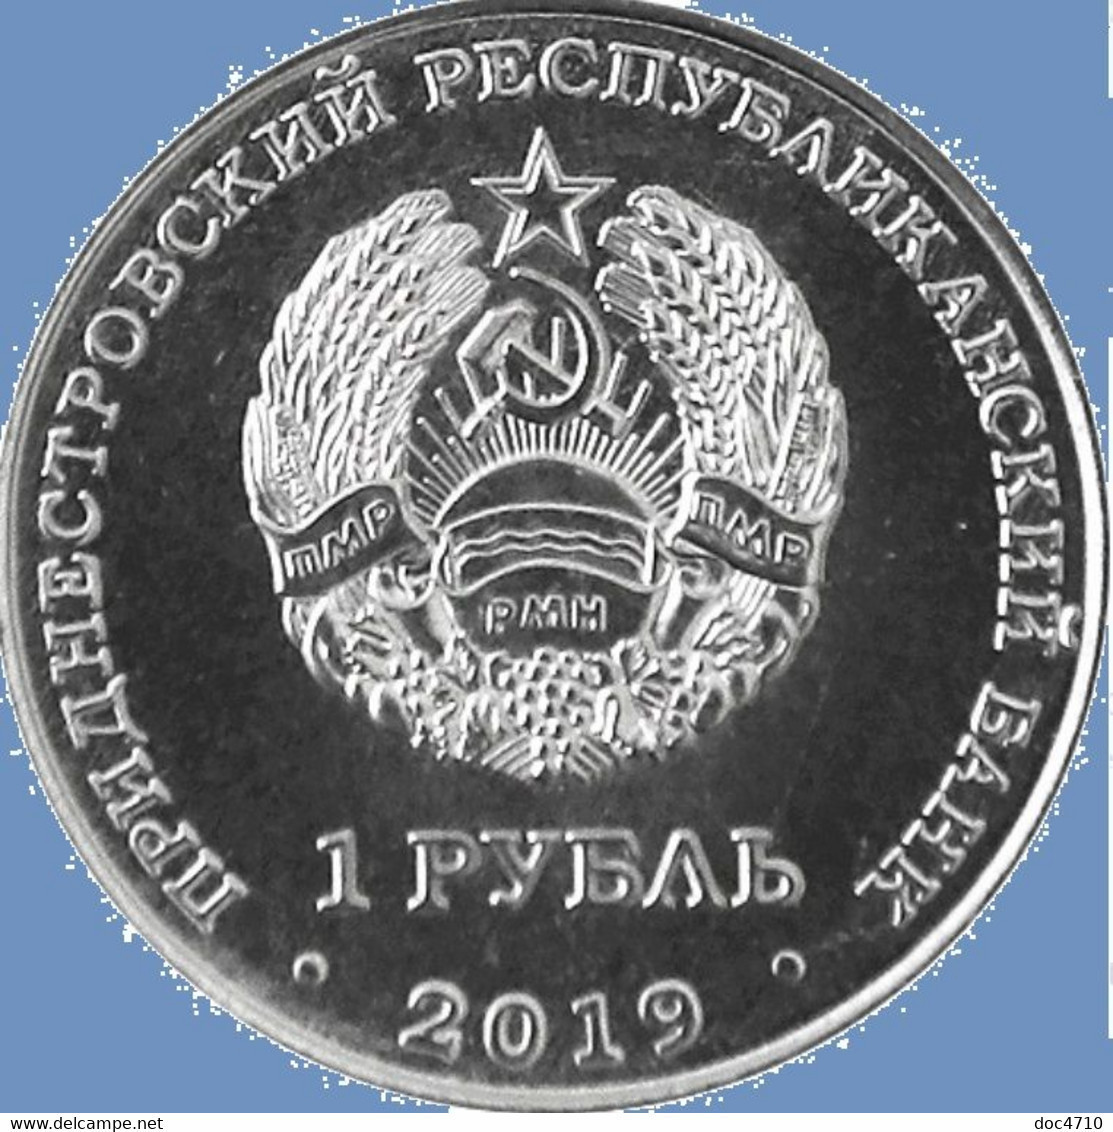 Moldova-Transnistria 1 Ruble 2019, Chinese Zodiac Series - Year Of The Metal Rat 2020, KM#New, Unc - Moldavië